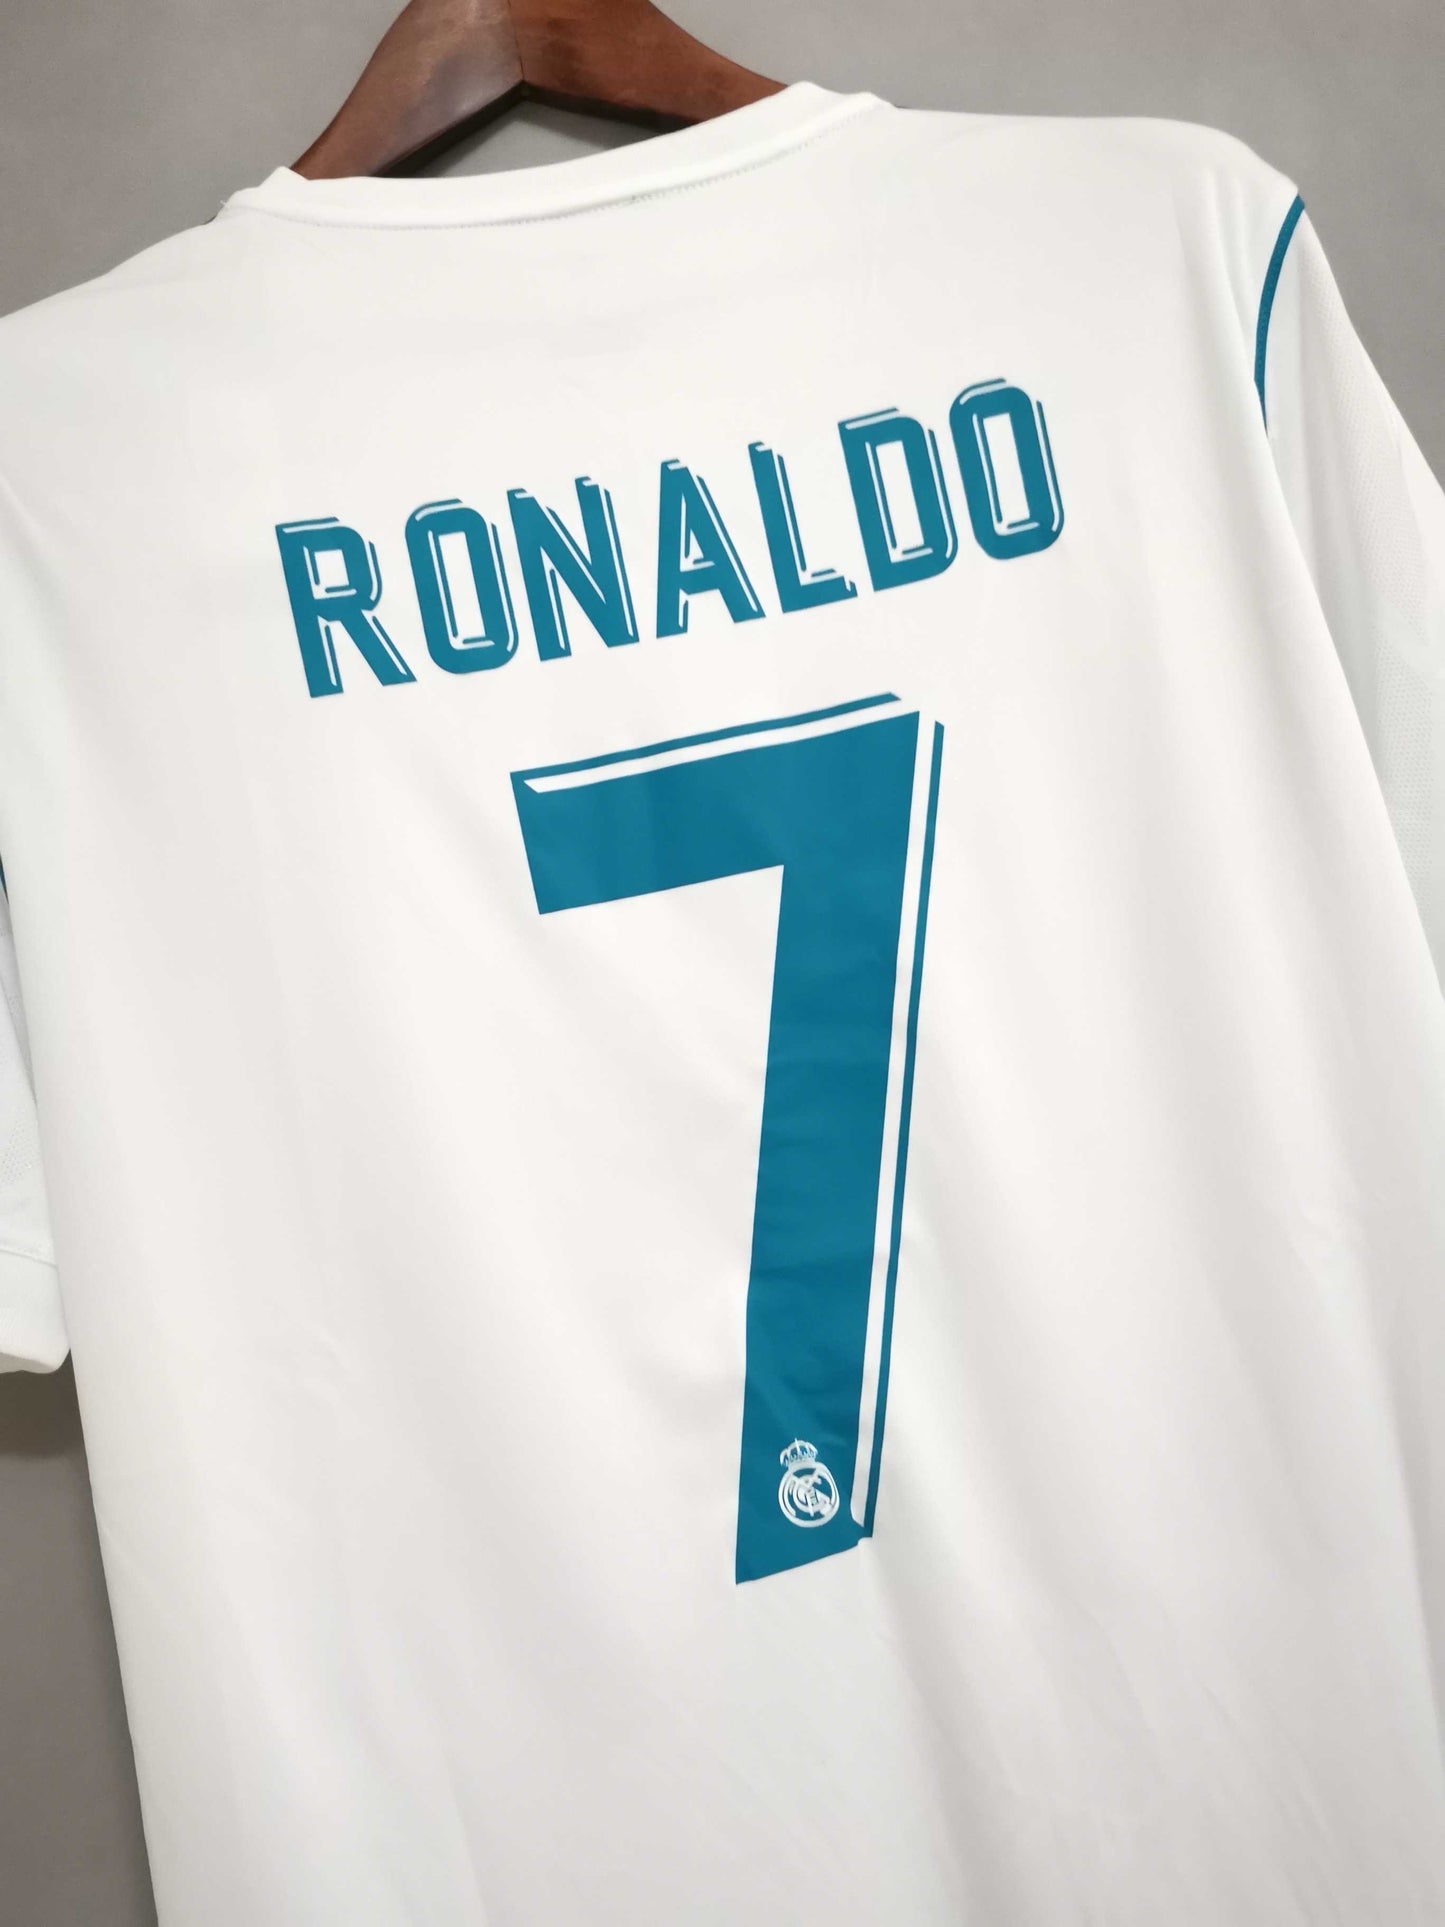 Real Madrid 2017 Kit Ronaldo